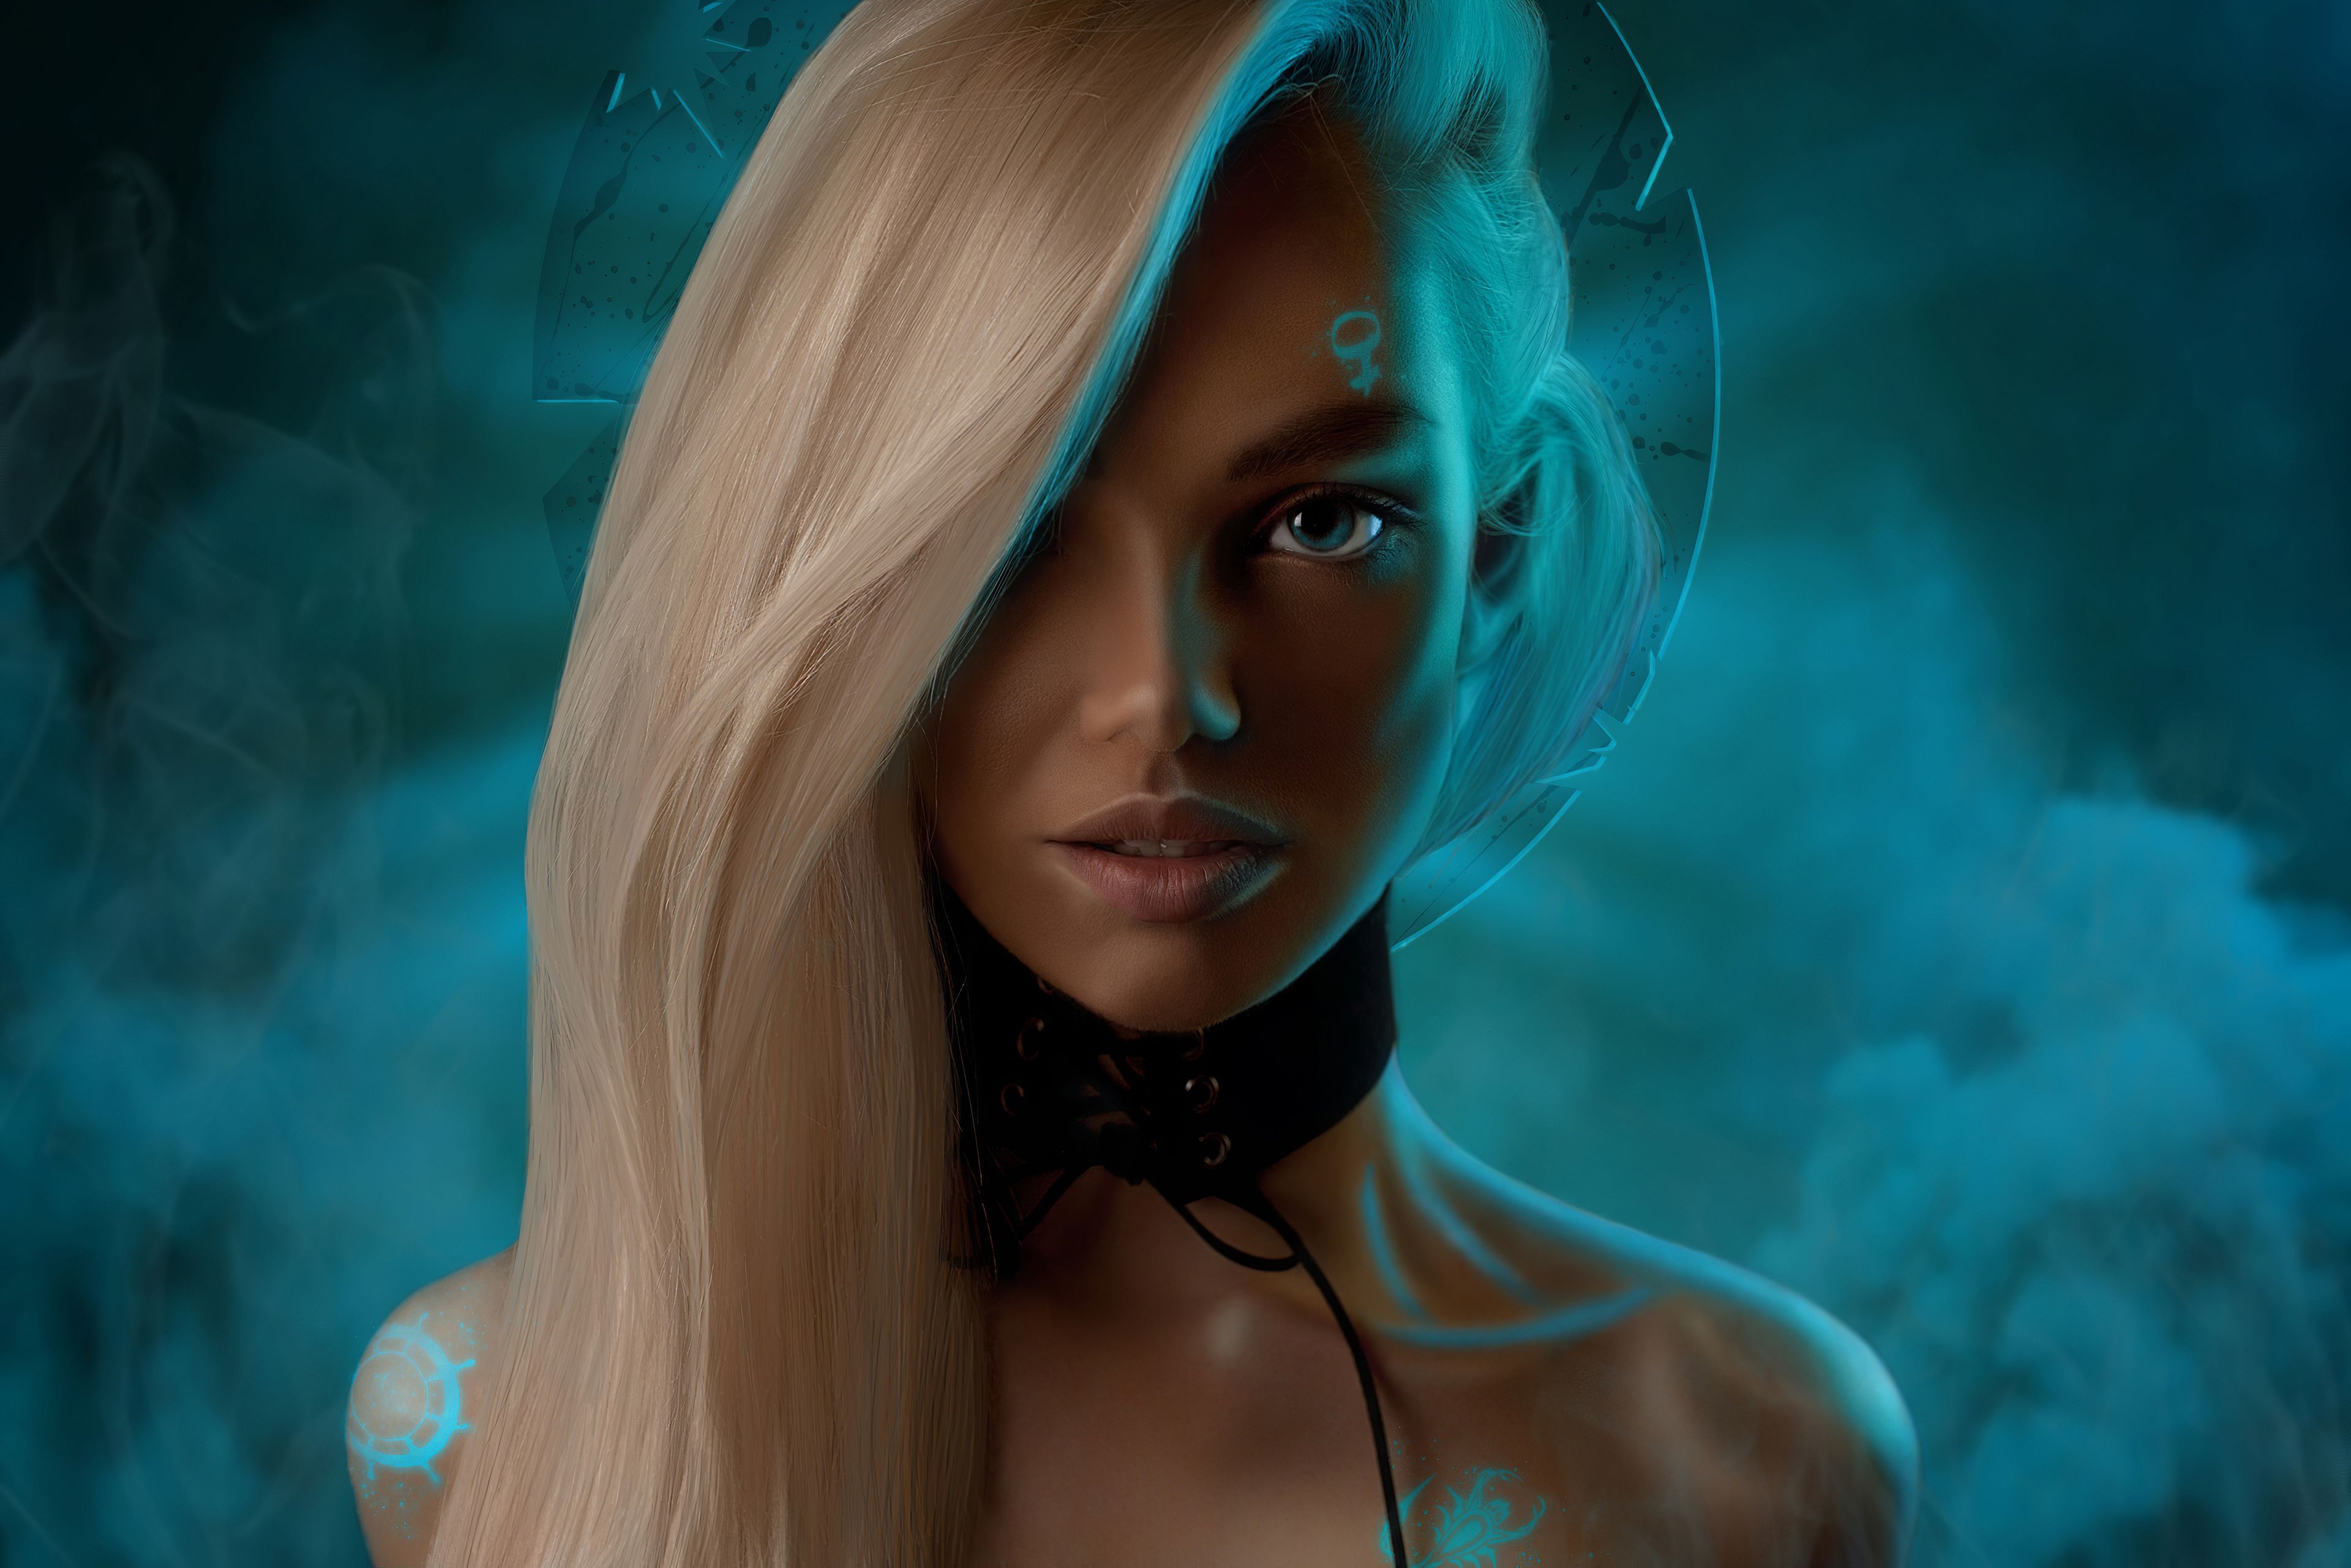 Neon Smoke Women Scifi 4k, HD Artist, 4k Wallpaper, Image, Background, Photo and Picture